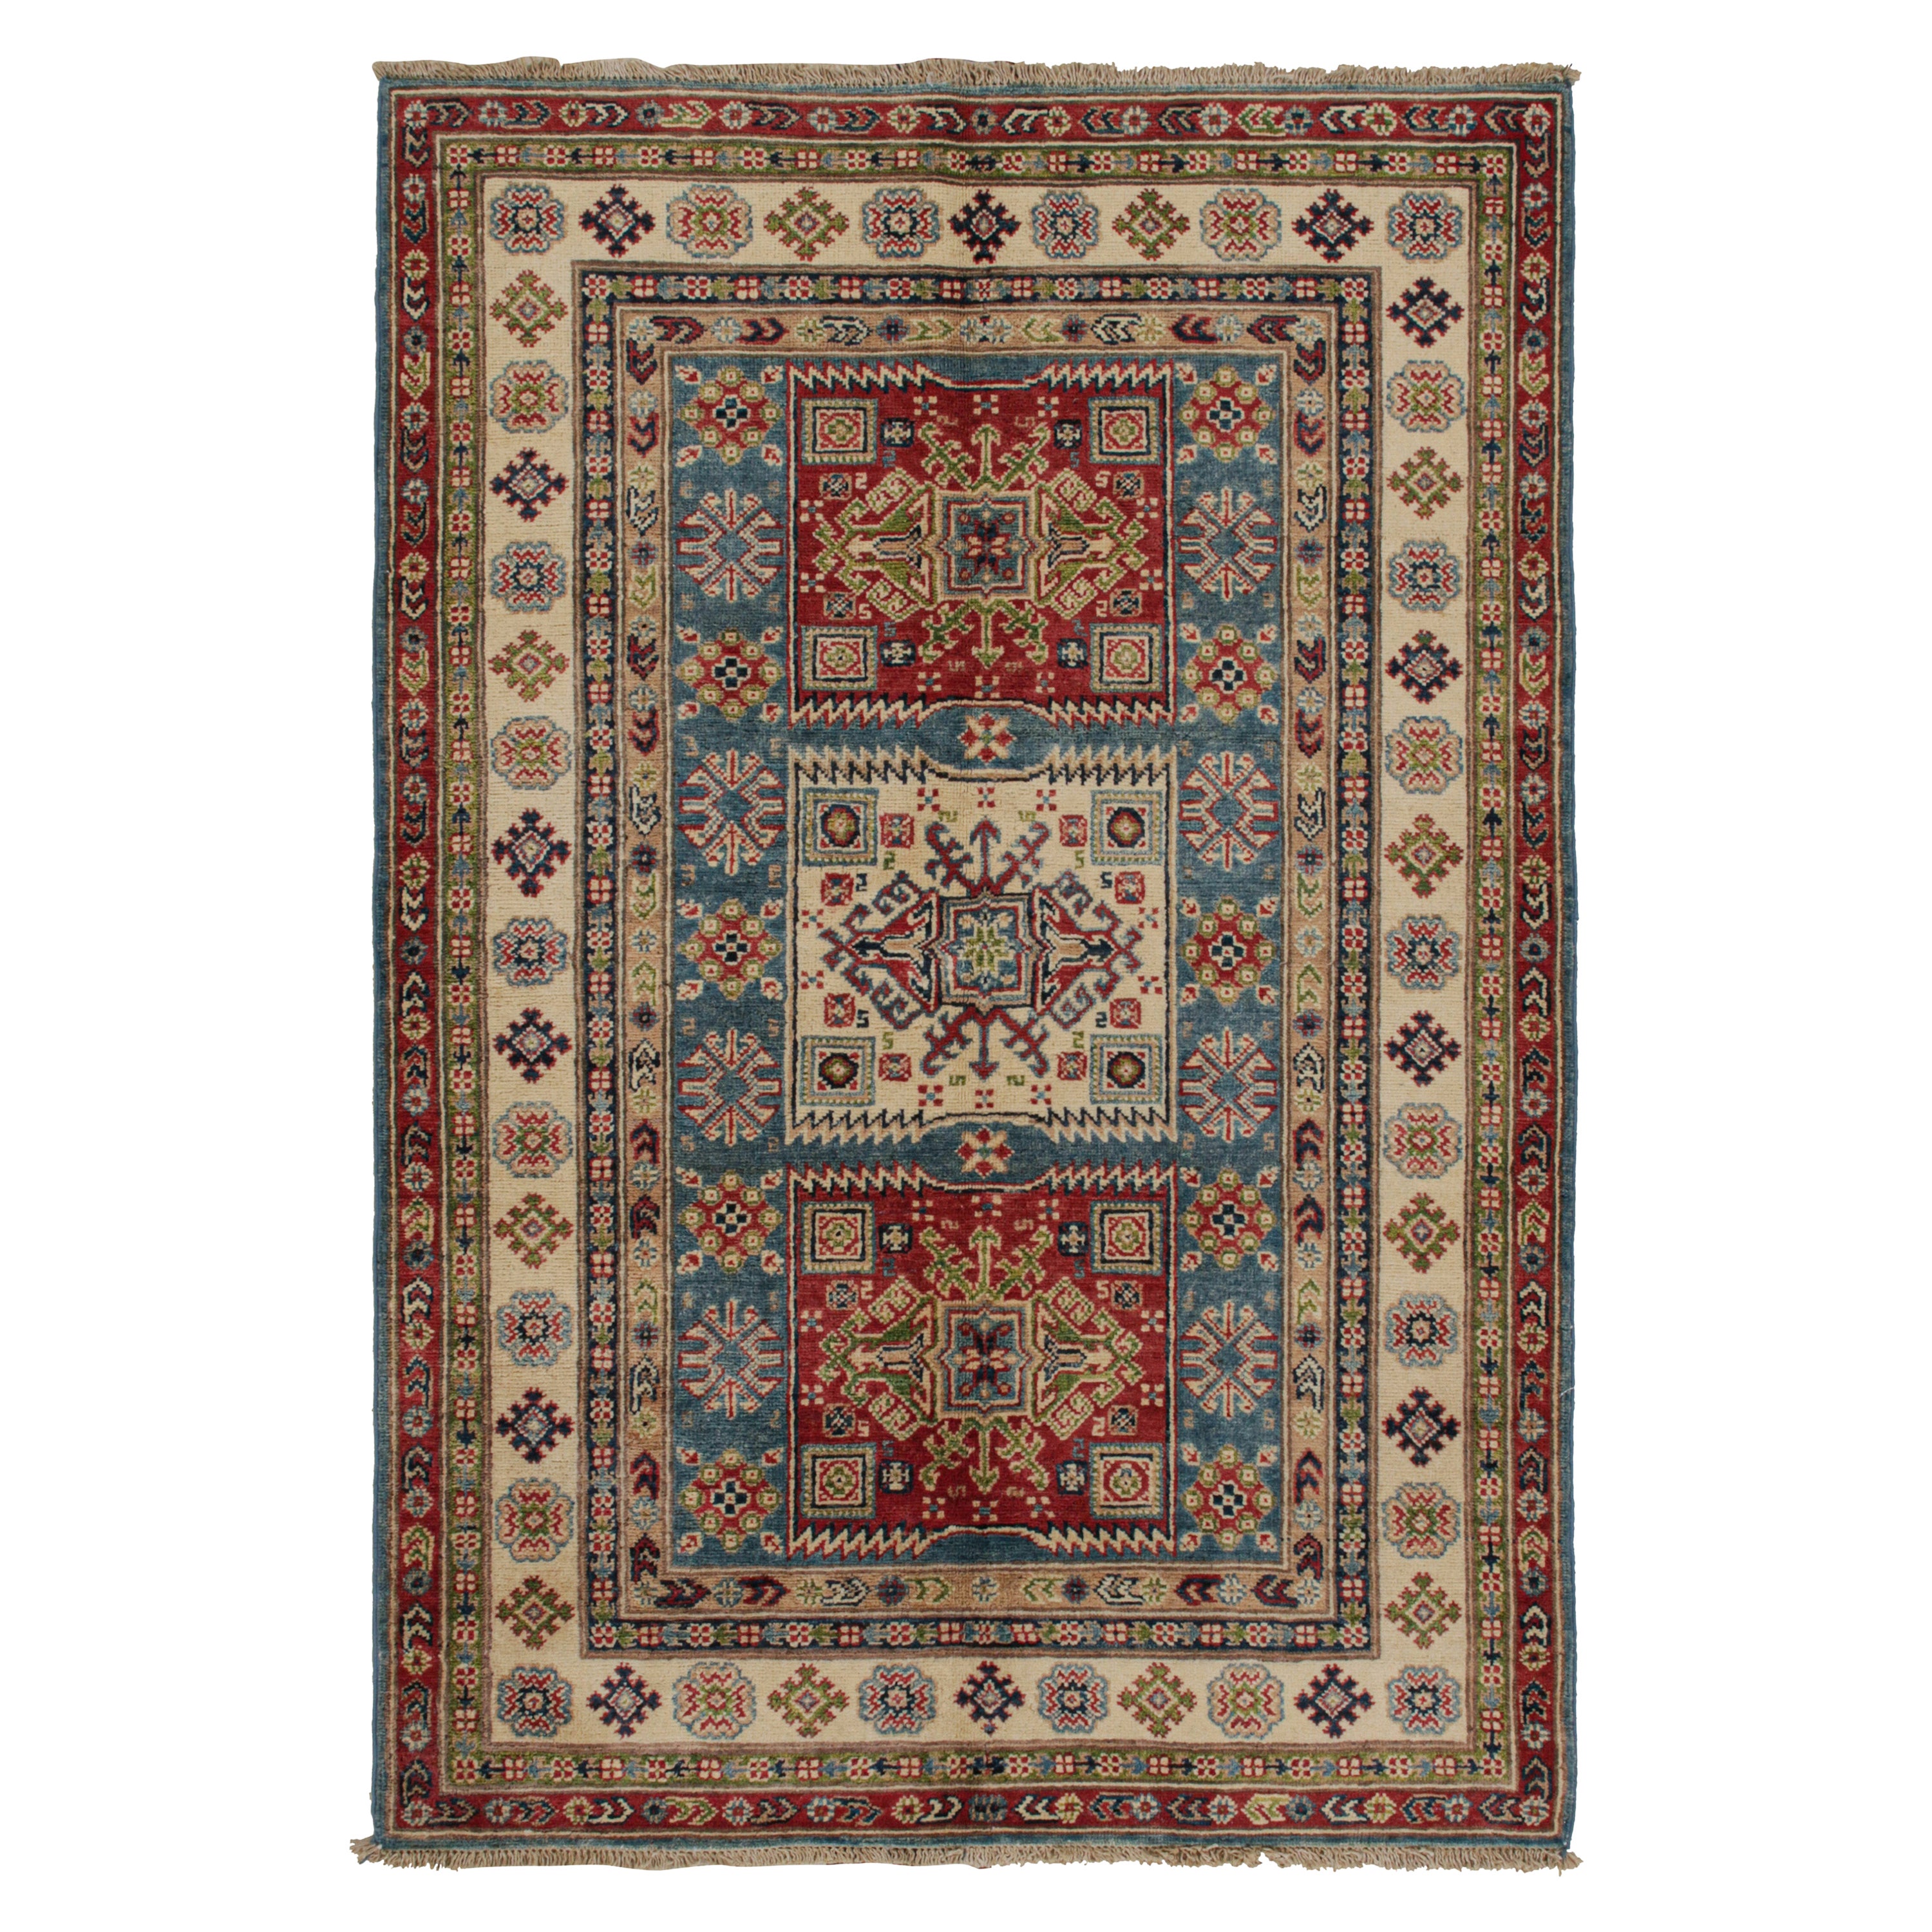 Rug & Kilim’s Kazak style rug in Red, Blue and Beige-Brown Geometric Patterns